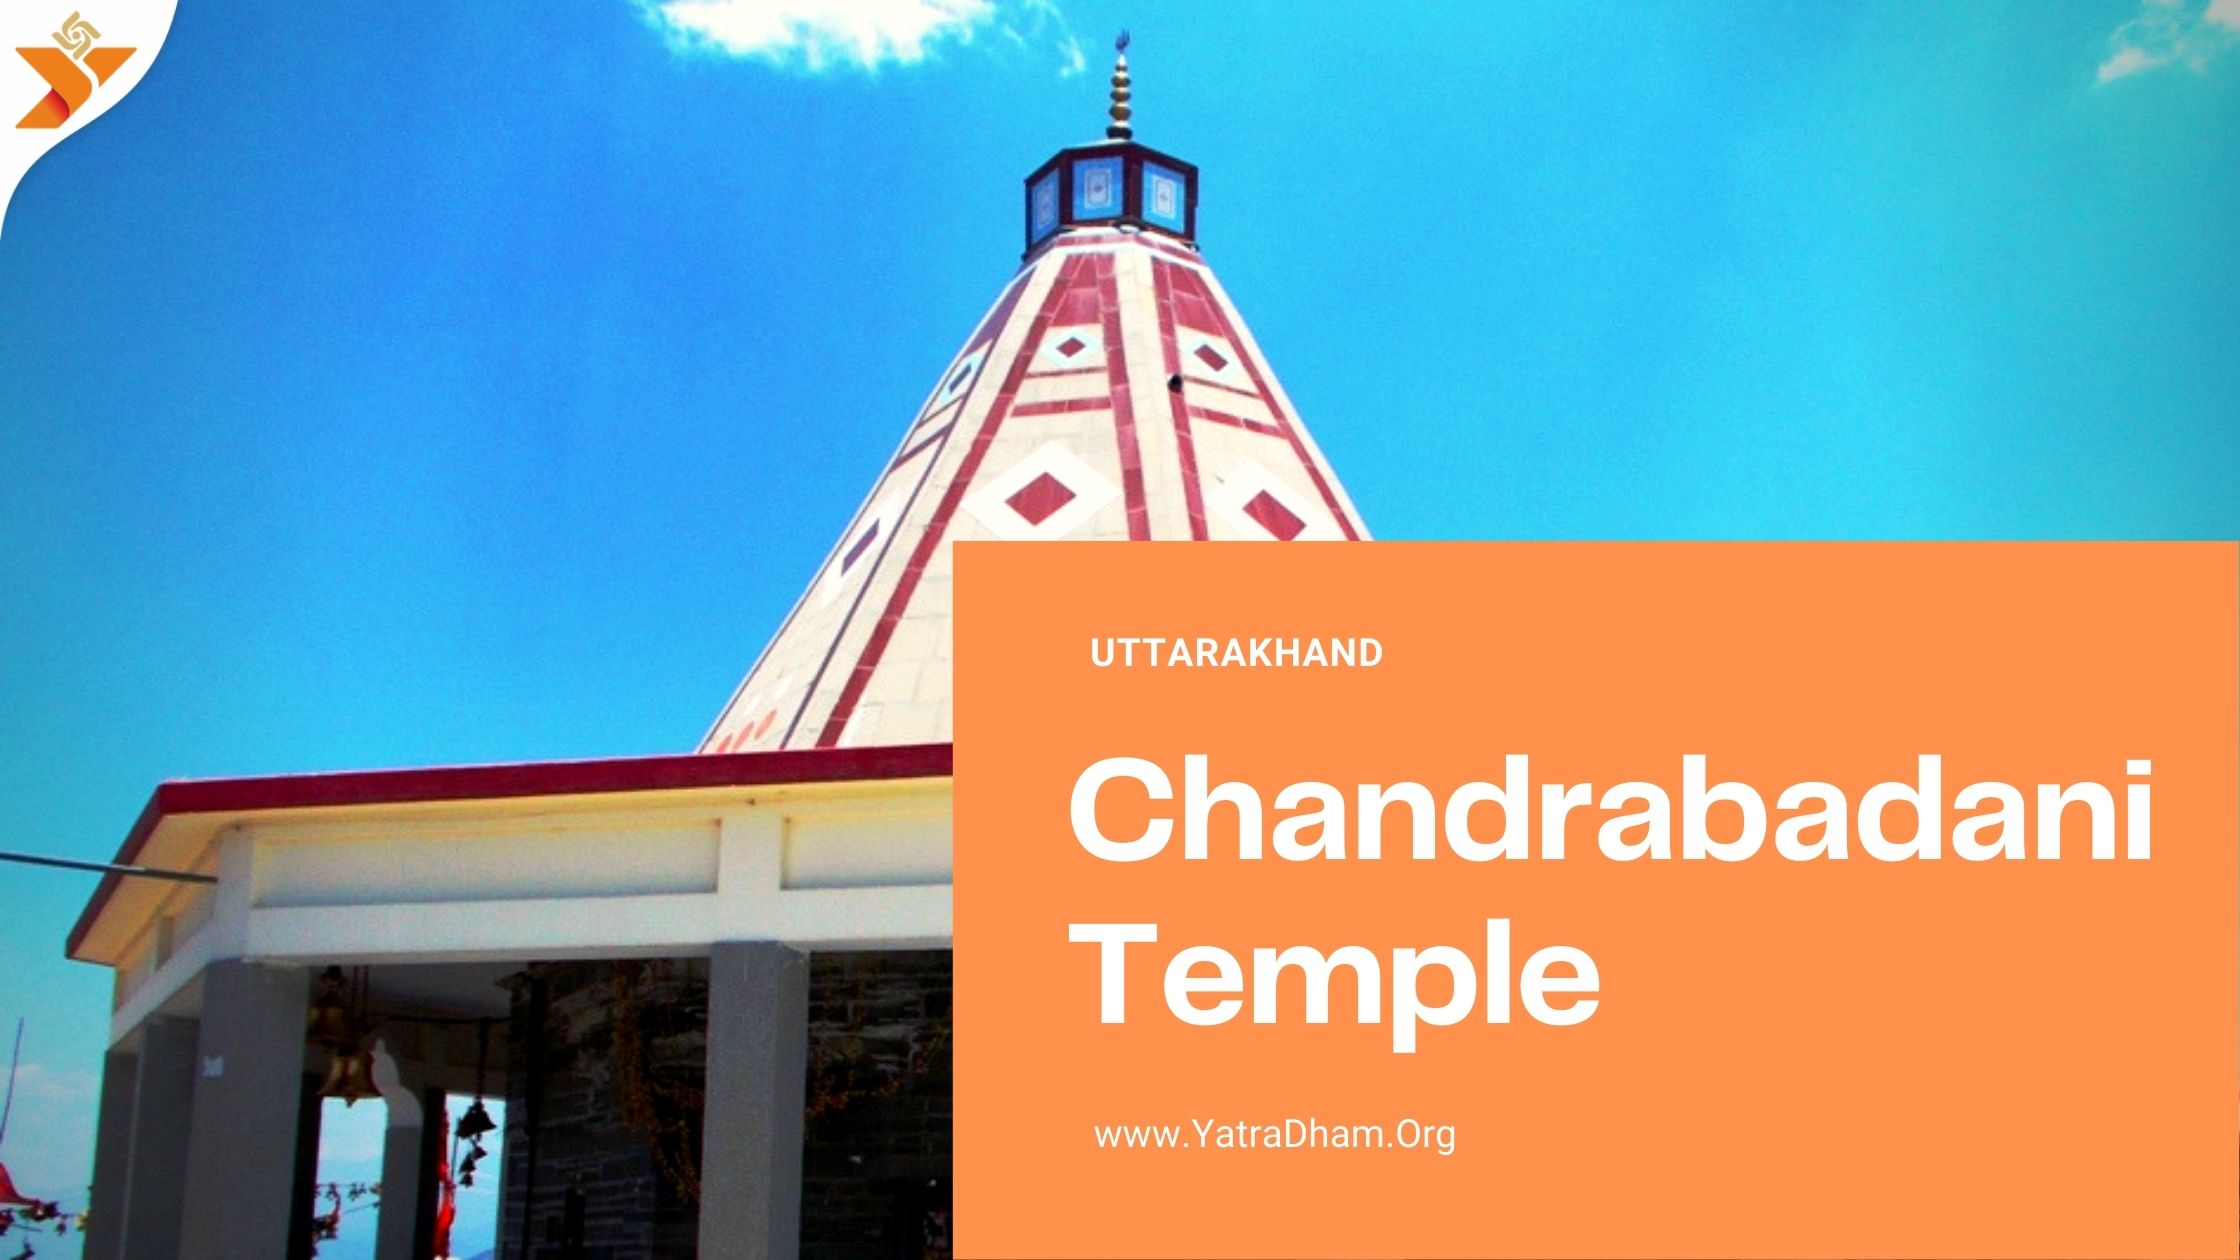 Chandrabadani Temple - Uttarakhand